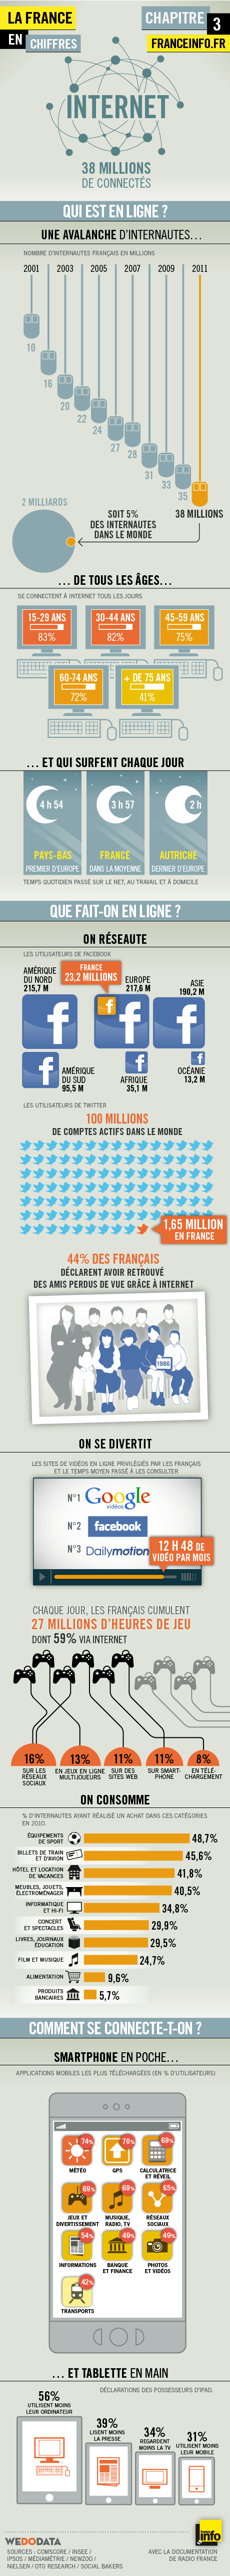 Statistiques chiffres France